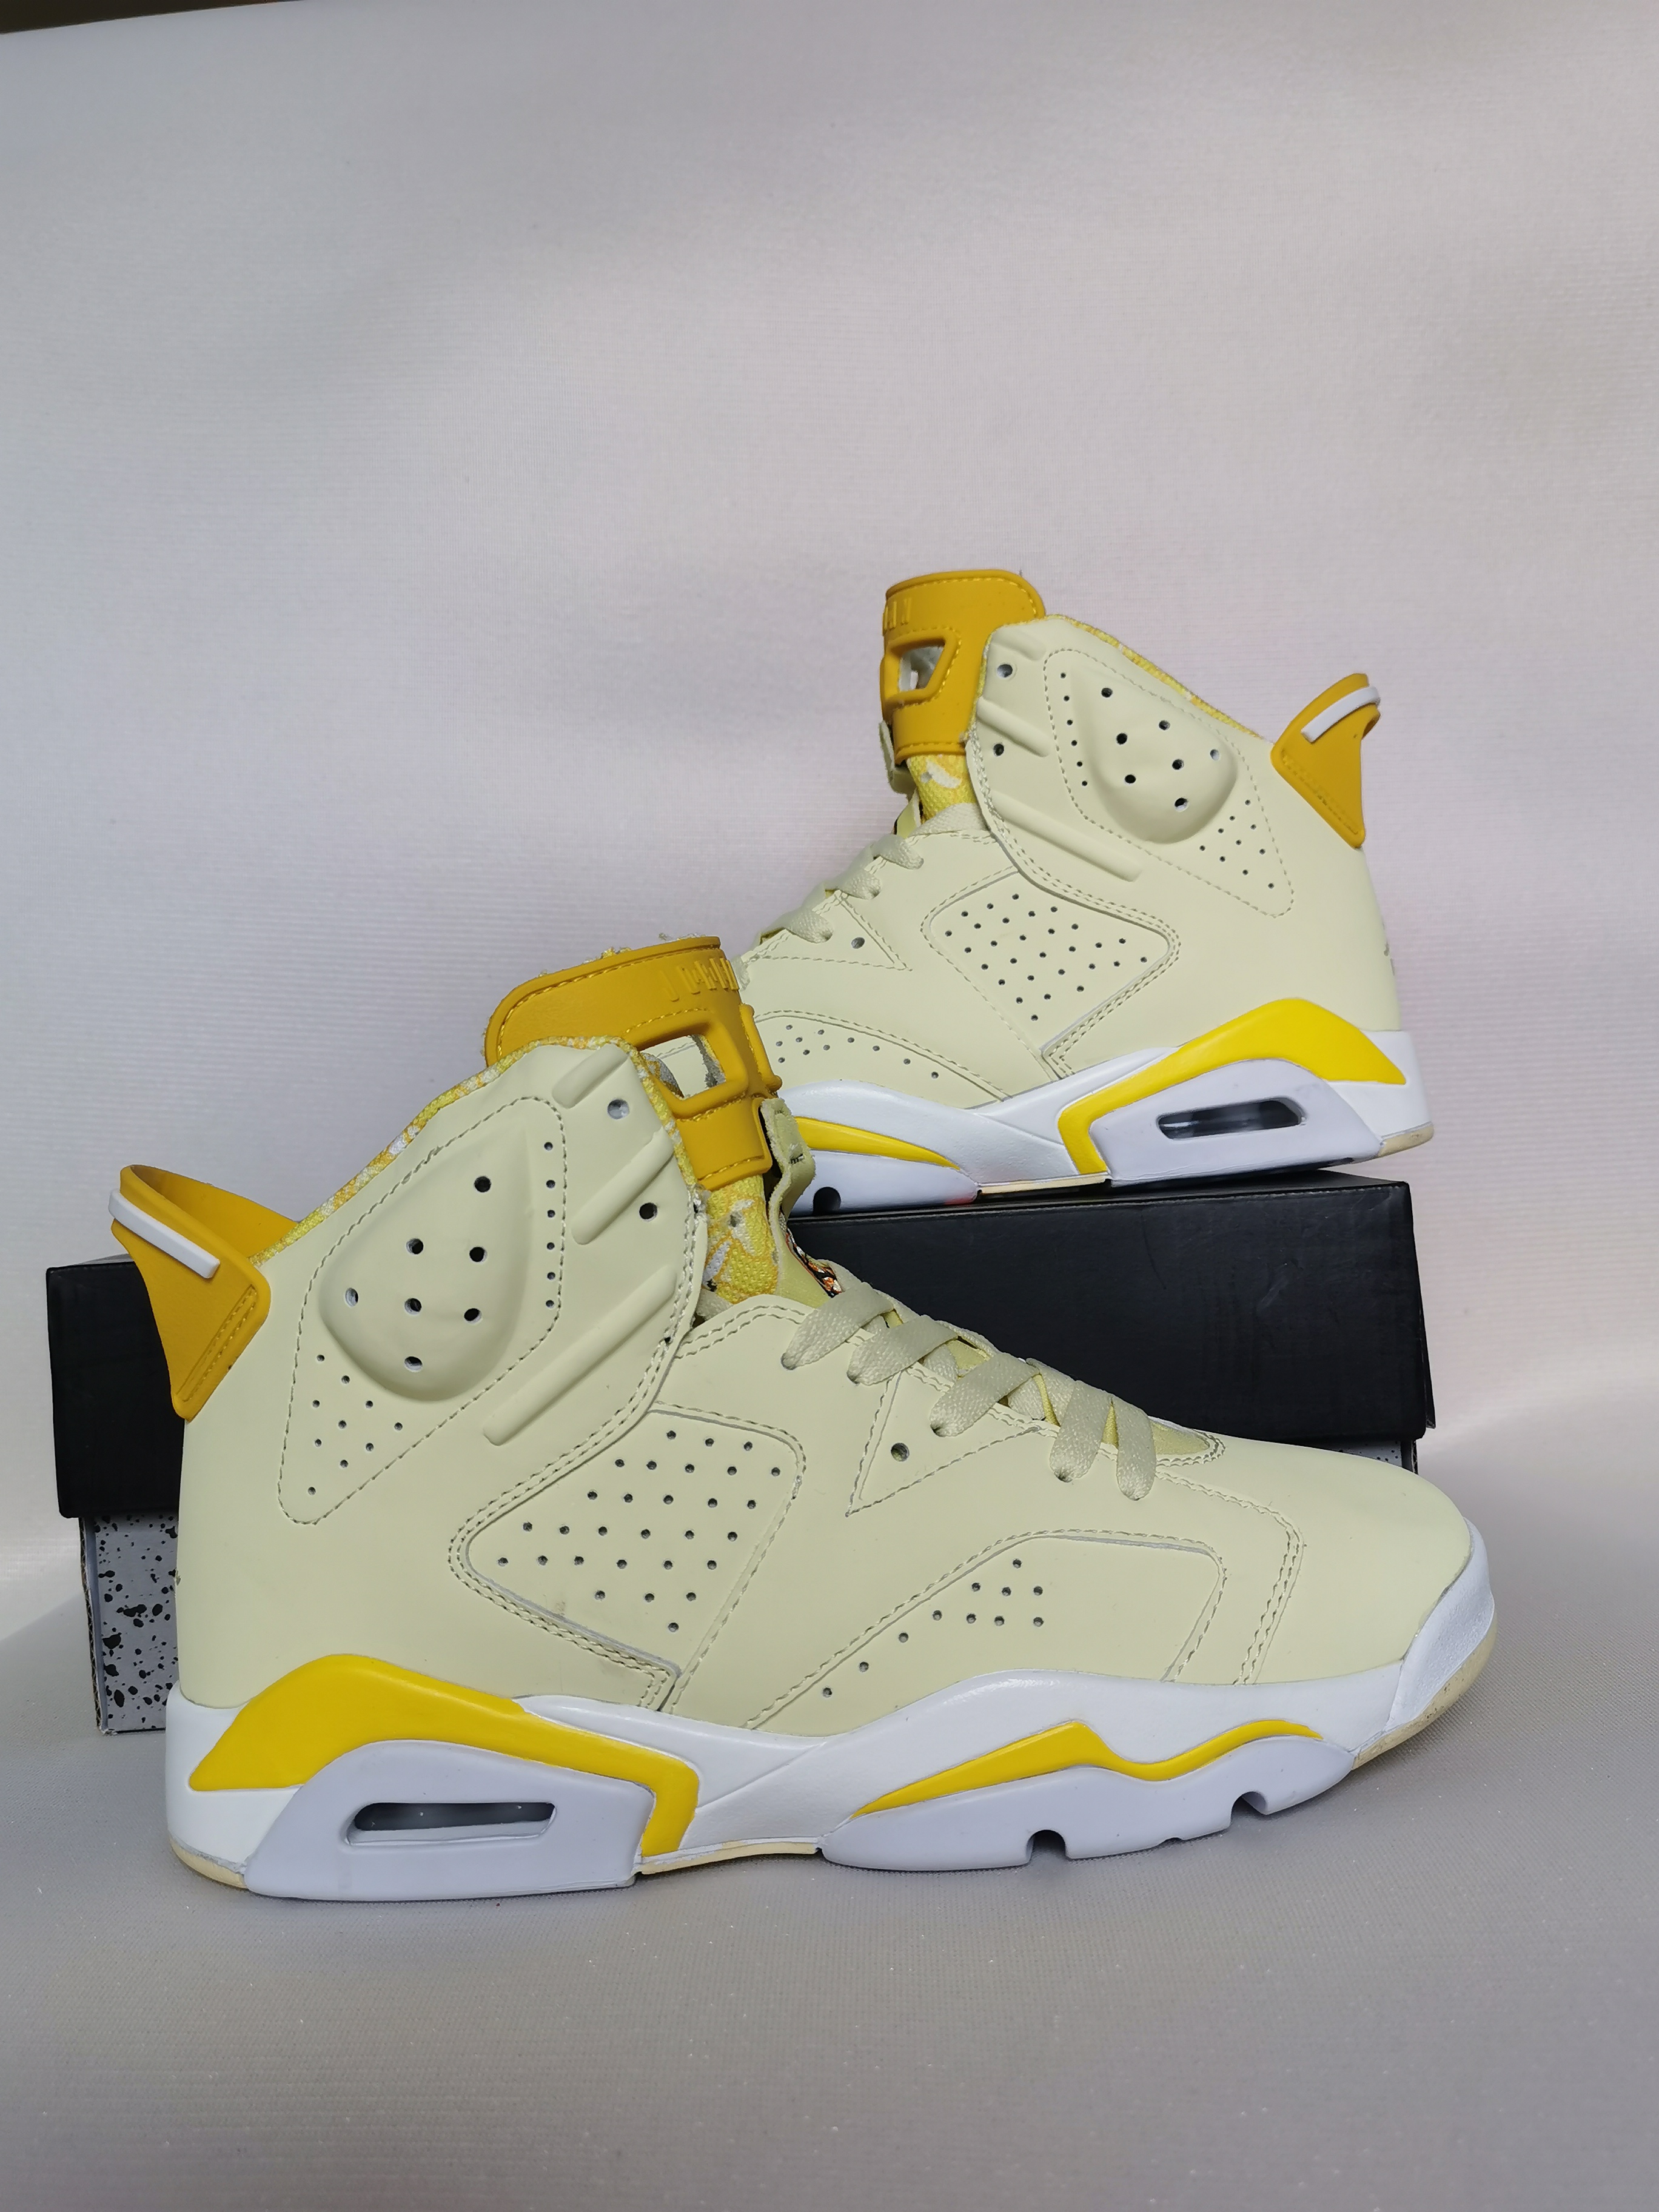 New Air Jordan 6 Retro Lemon Yellow White Shoes